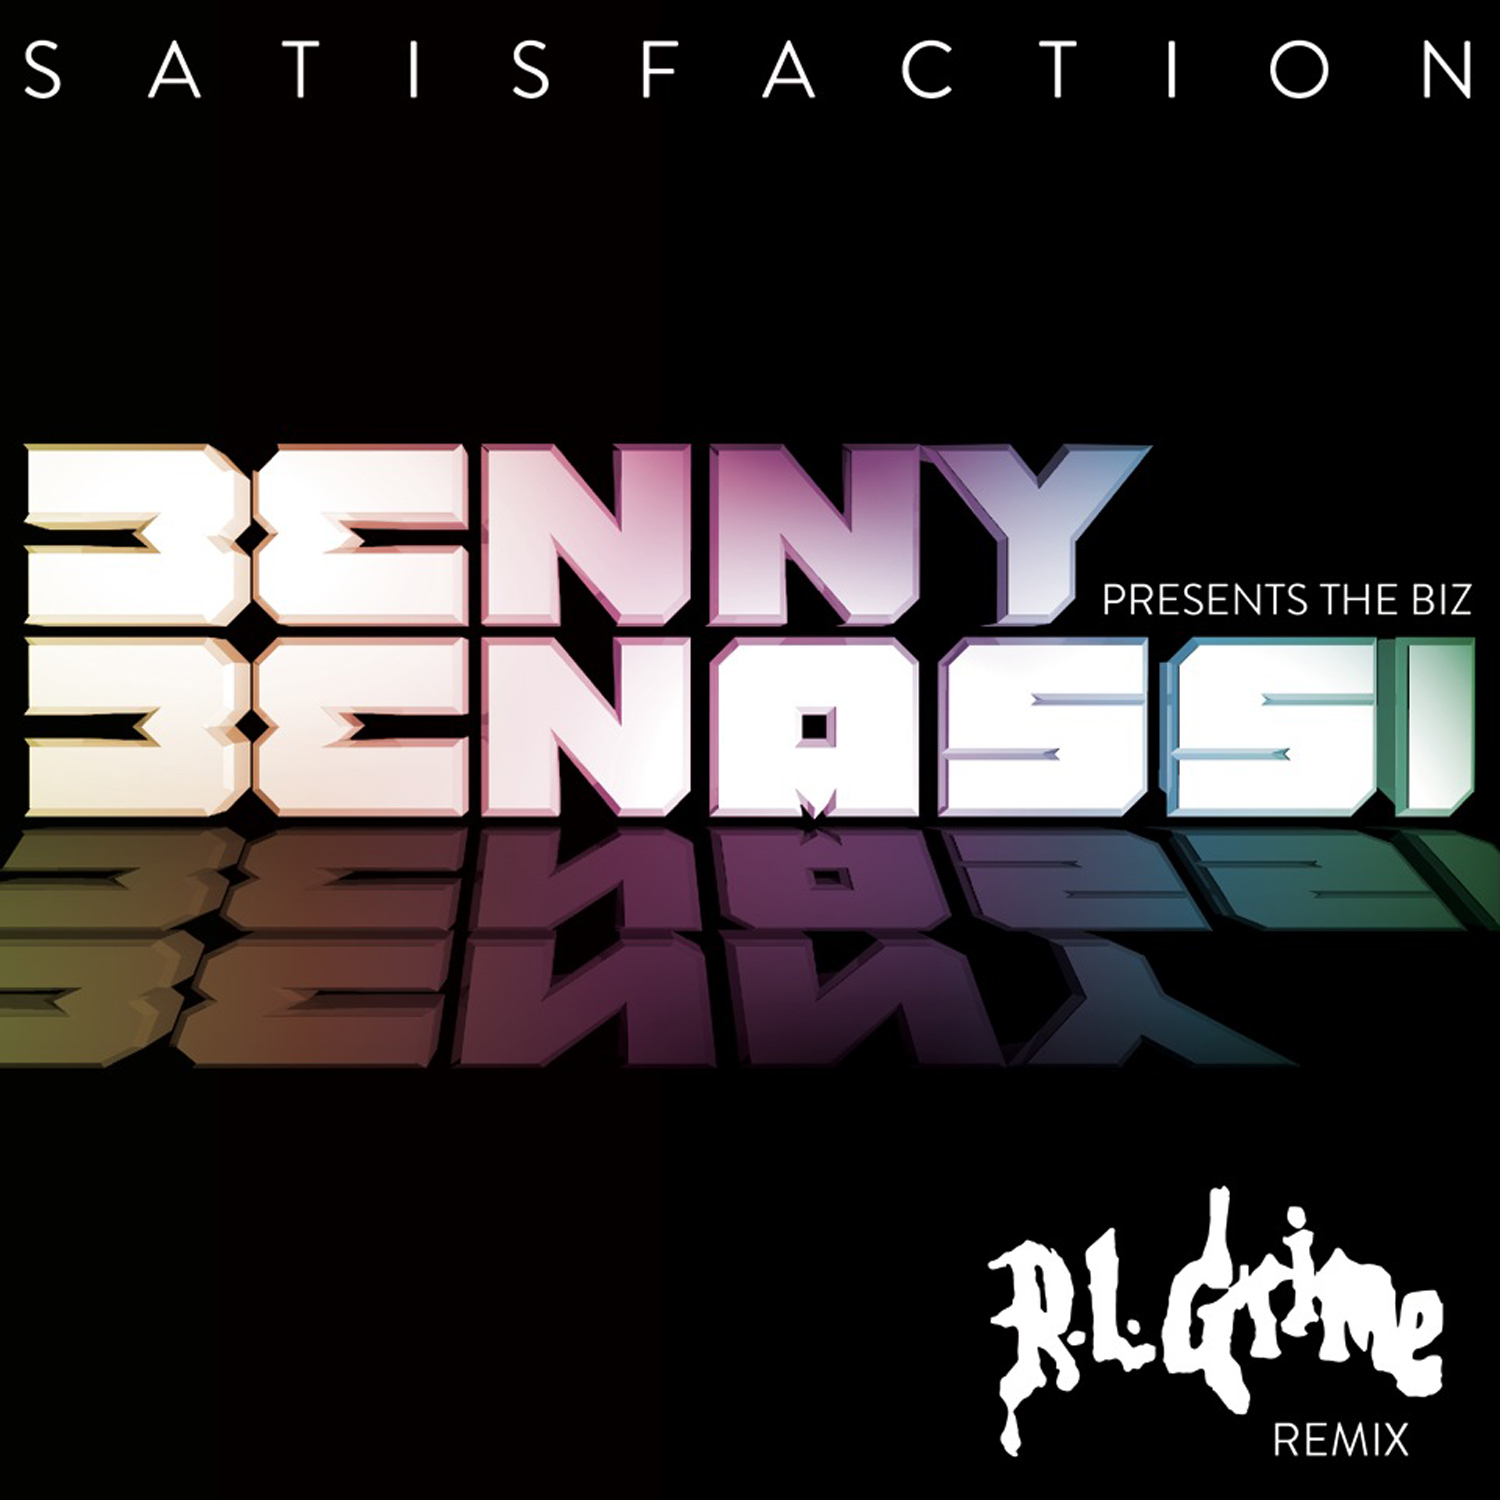 Prenesi Satisfaction (RL Grime Remix) - Benny Benassi (Preview)